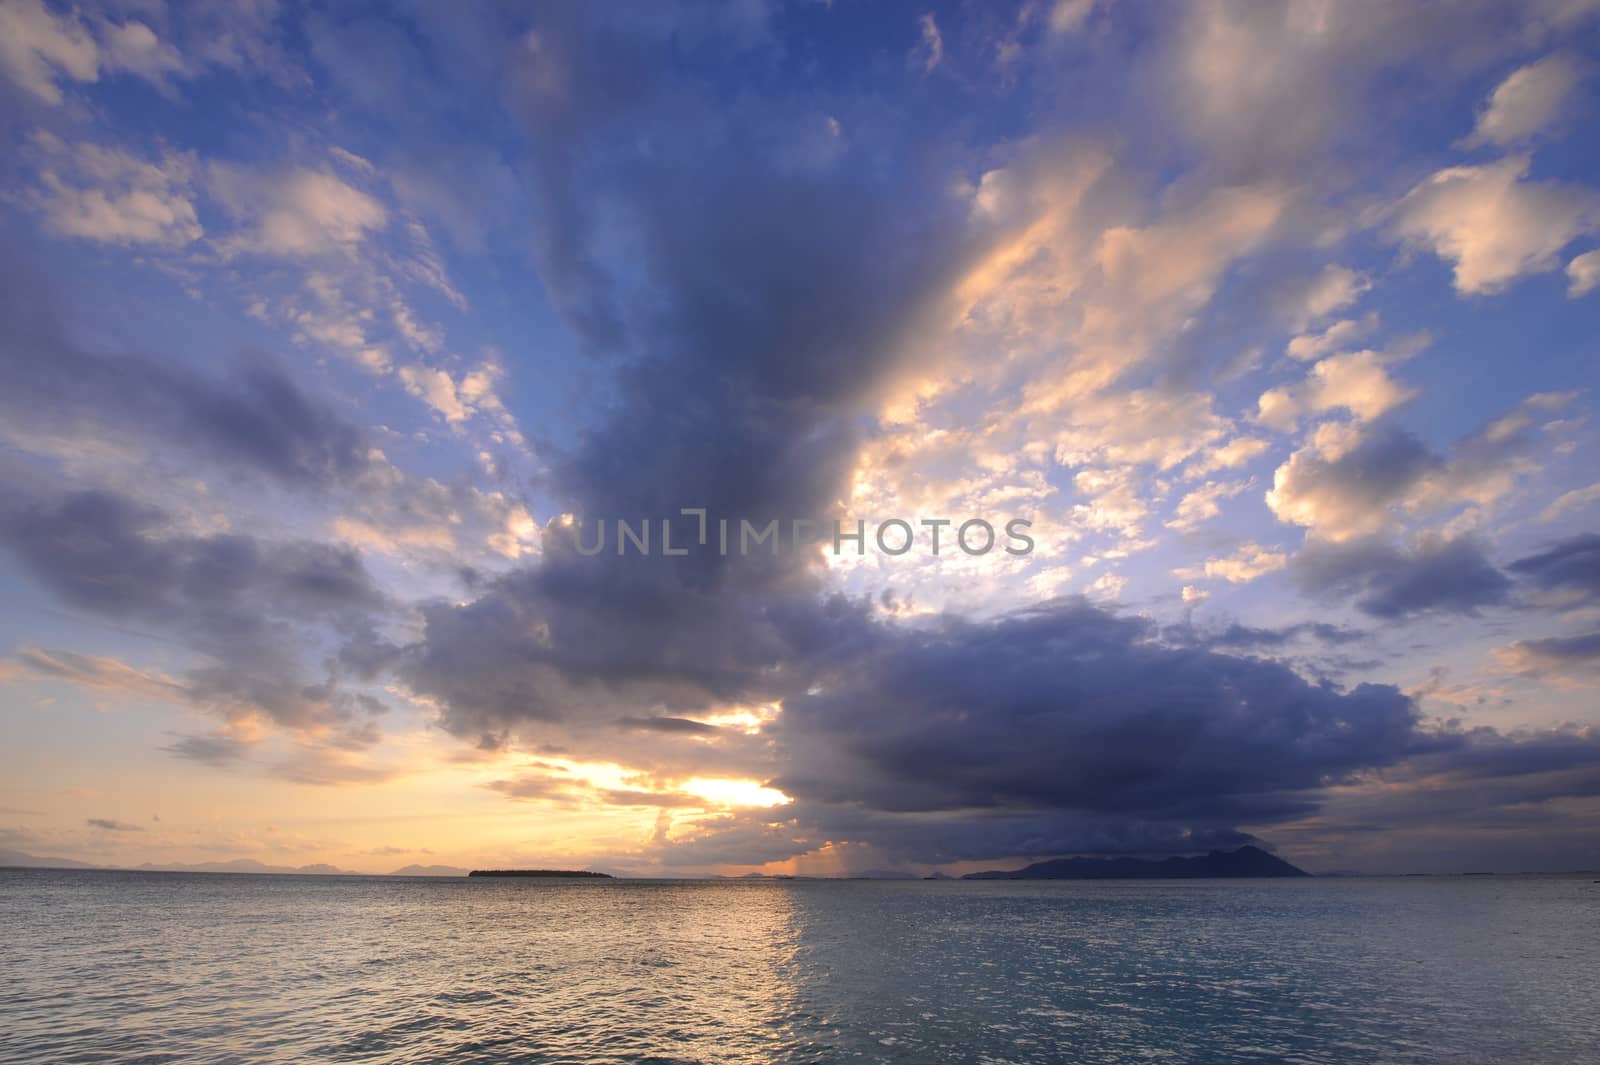 Scenery of islands at Semporna, Sabah Borneo, Malaysia.
 by shahreen